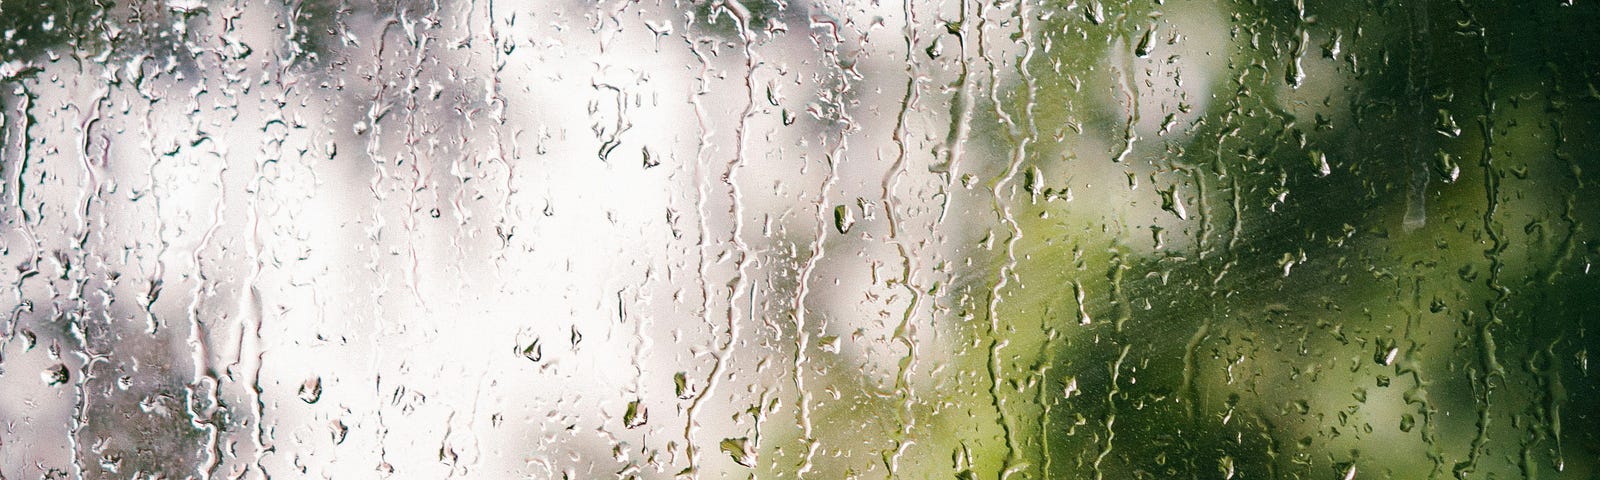 Rain running down a window.